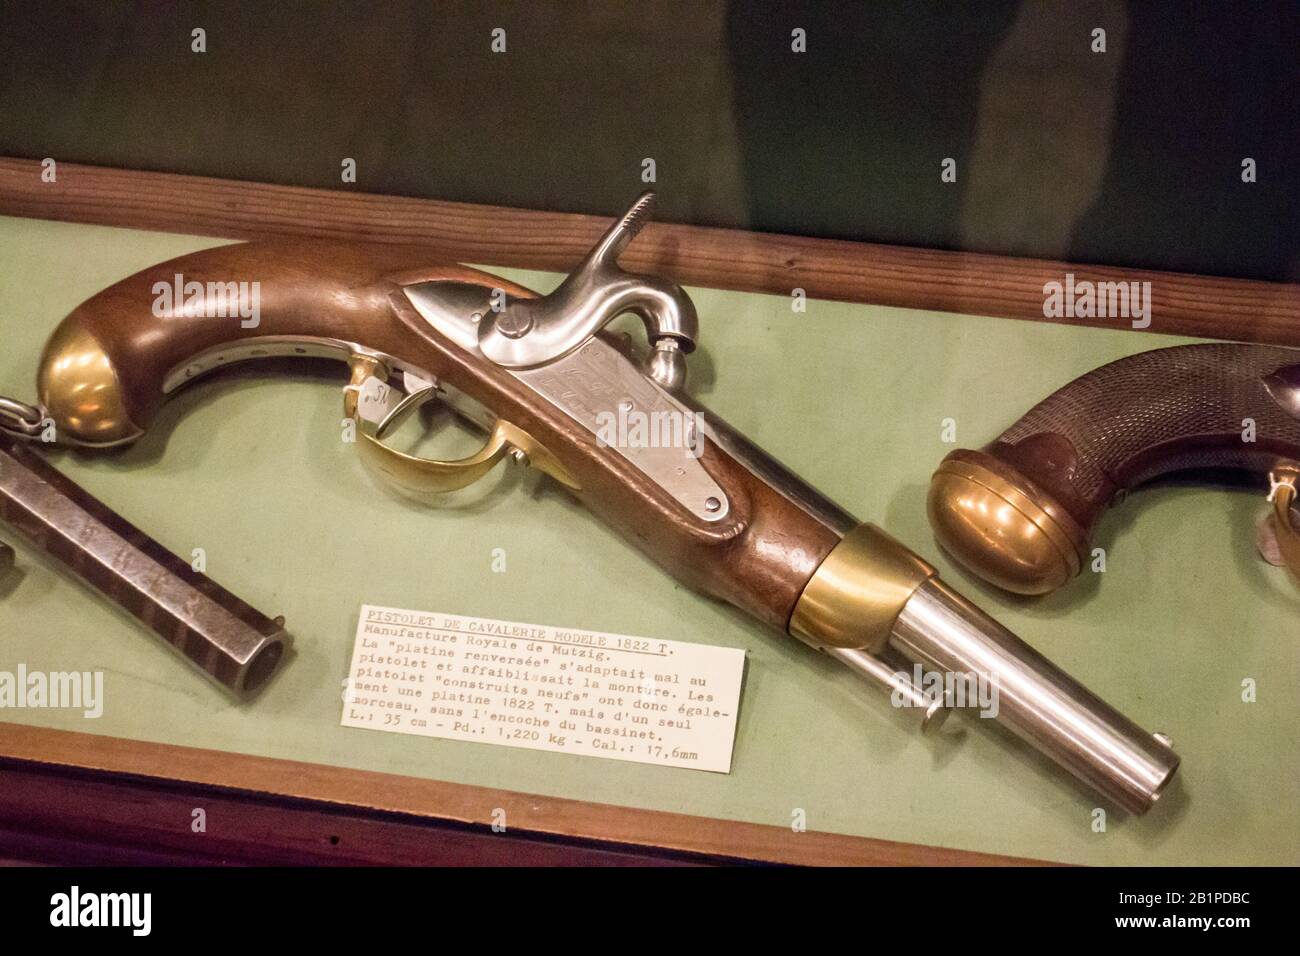 Musée de l'Emperi,Salon-de-Provence : Pistolet de Cavalerie modèle 1822T,calibro 17,6 mm fabbricazione Royale de Mutzig Foto Stock